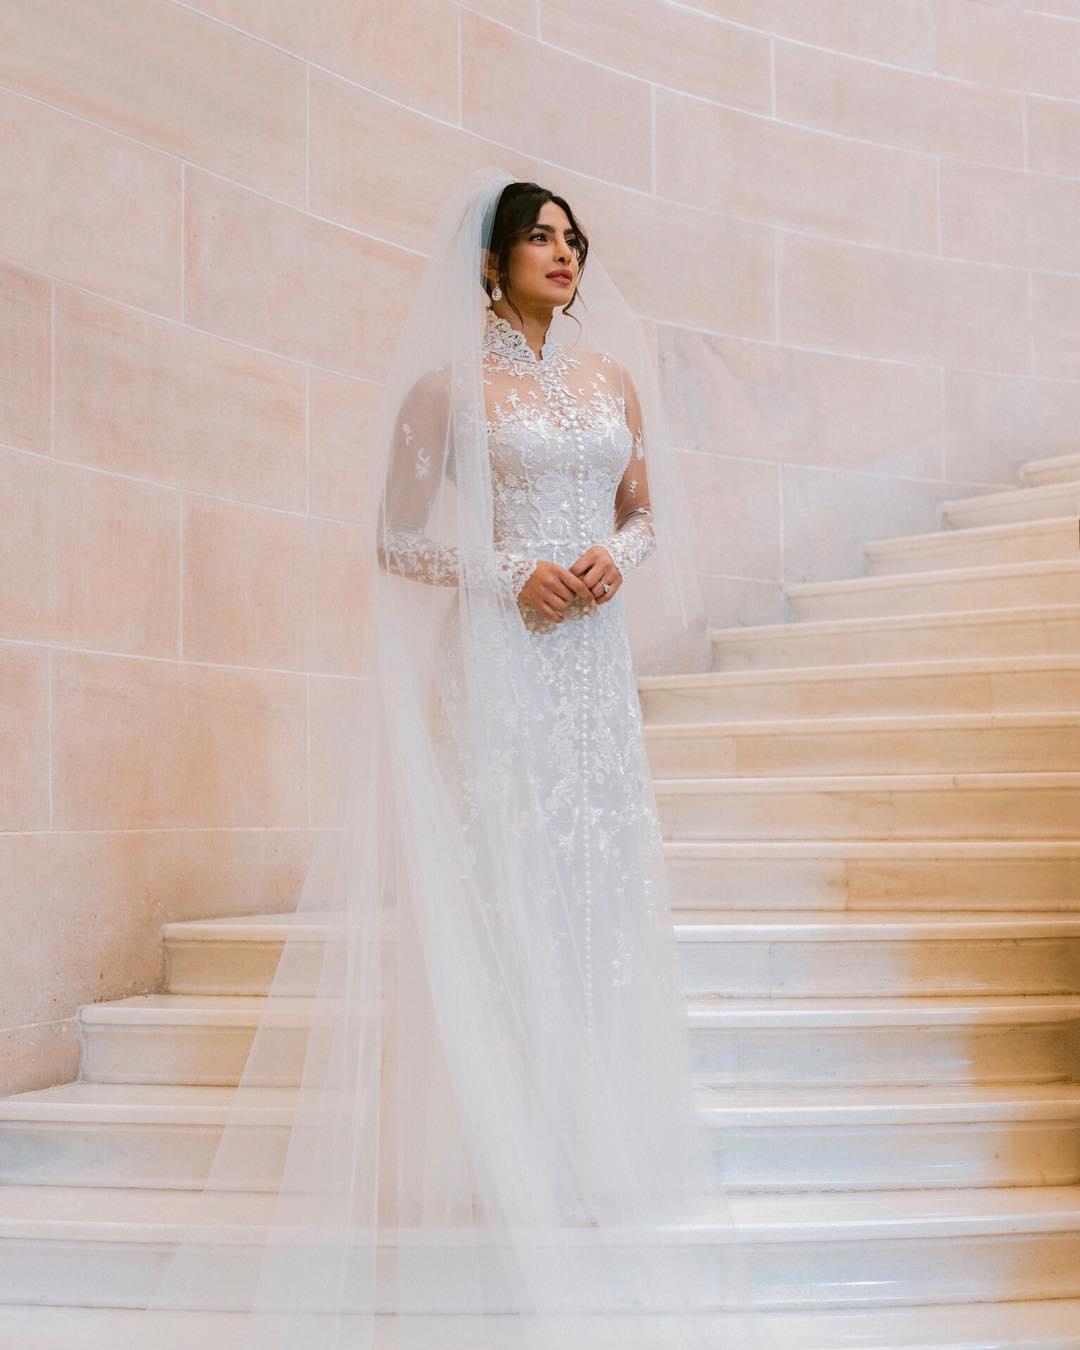 The Most Iconic Celebrity Ralph Lauren Wedding Dresses